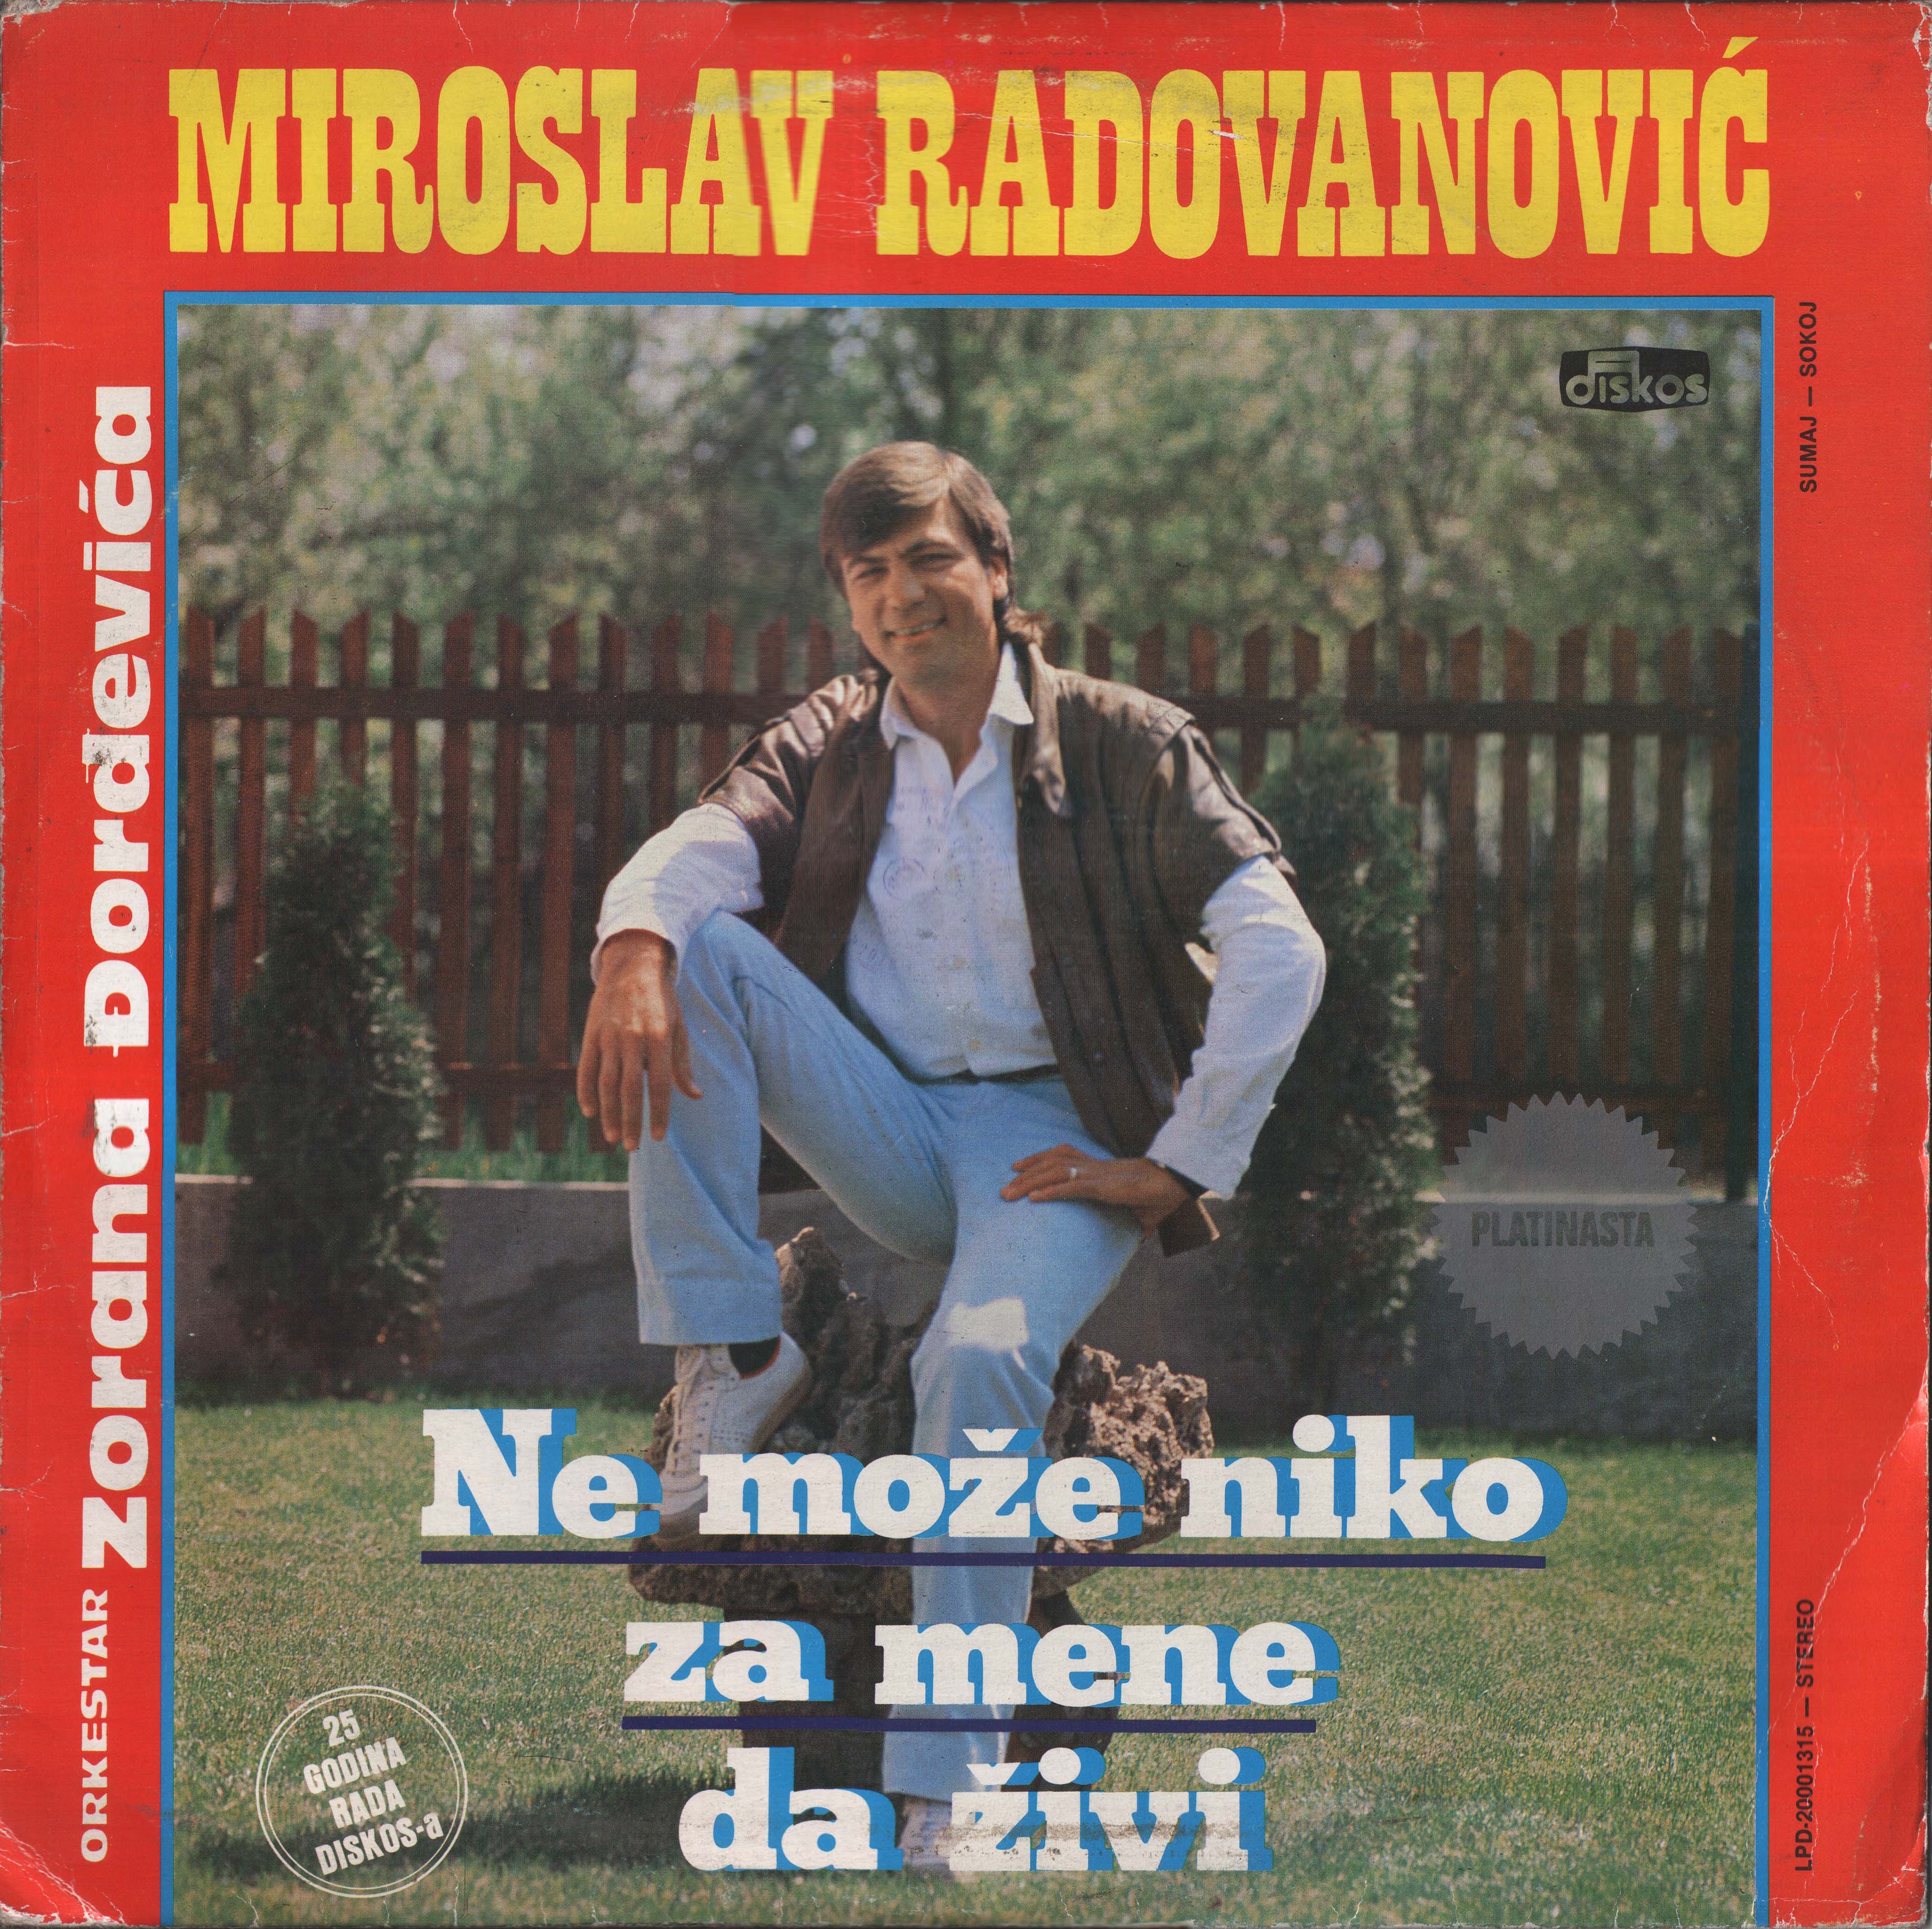 Miroslav Radovanovic 1987 P